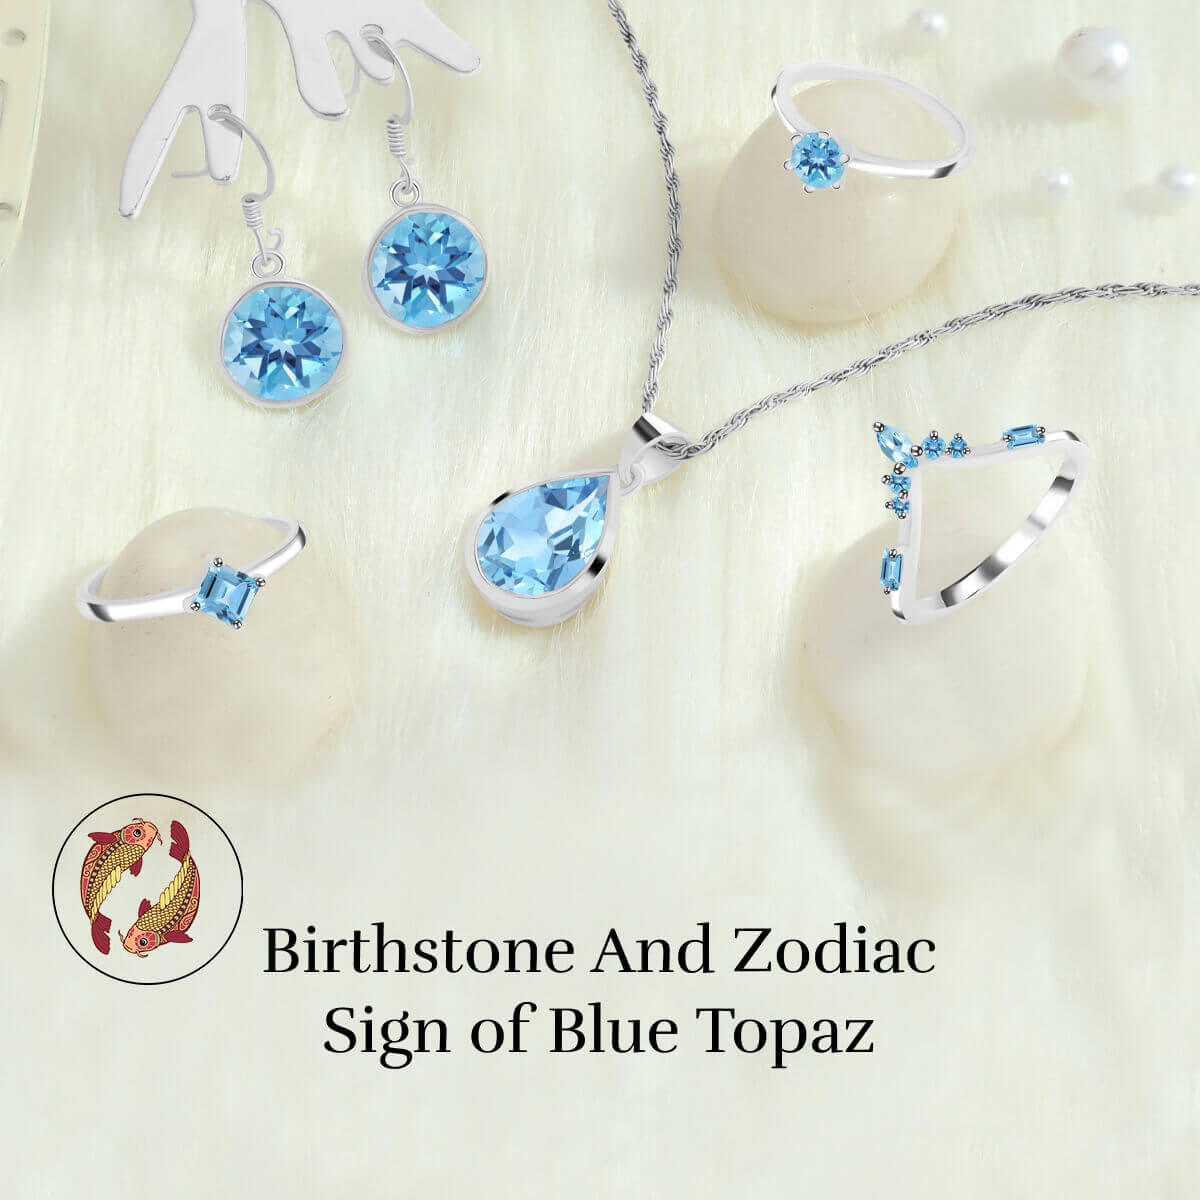 Birthstone And Zodiac Sign Of Blue Topaz